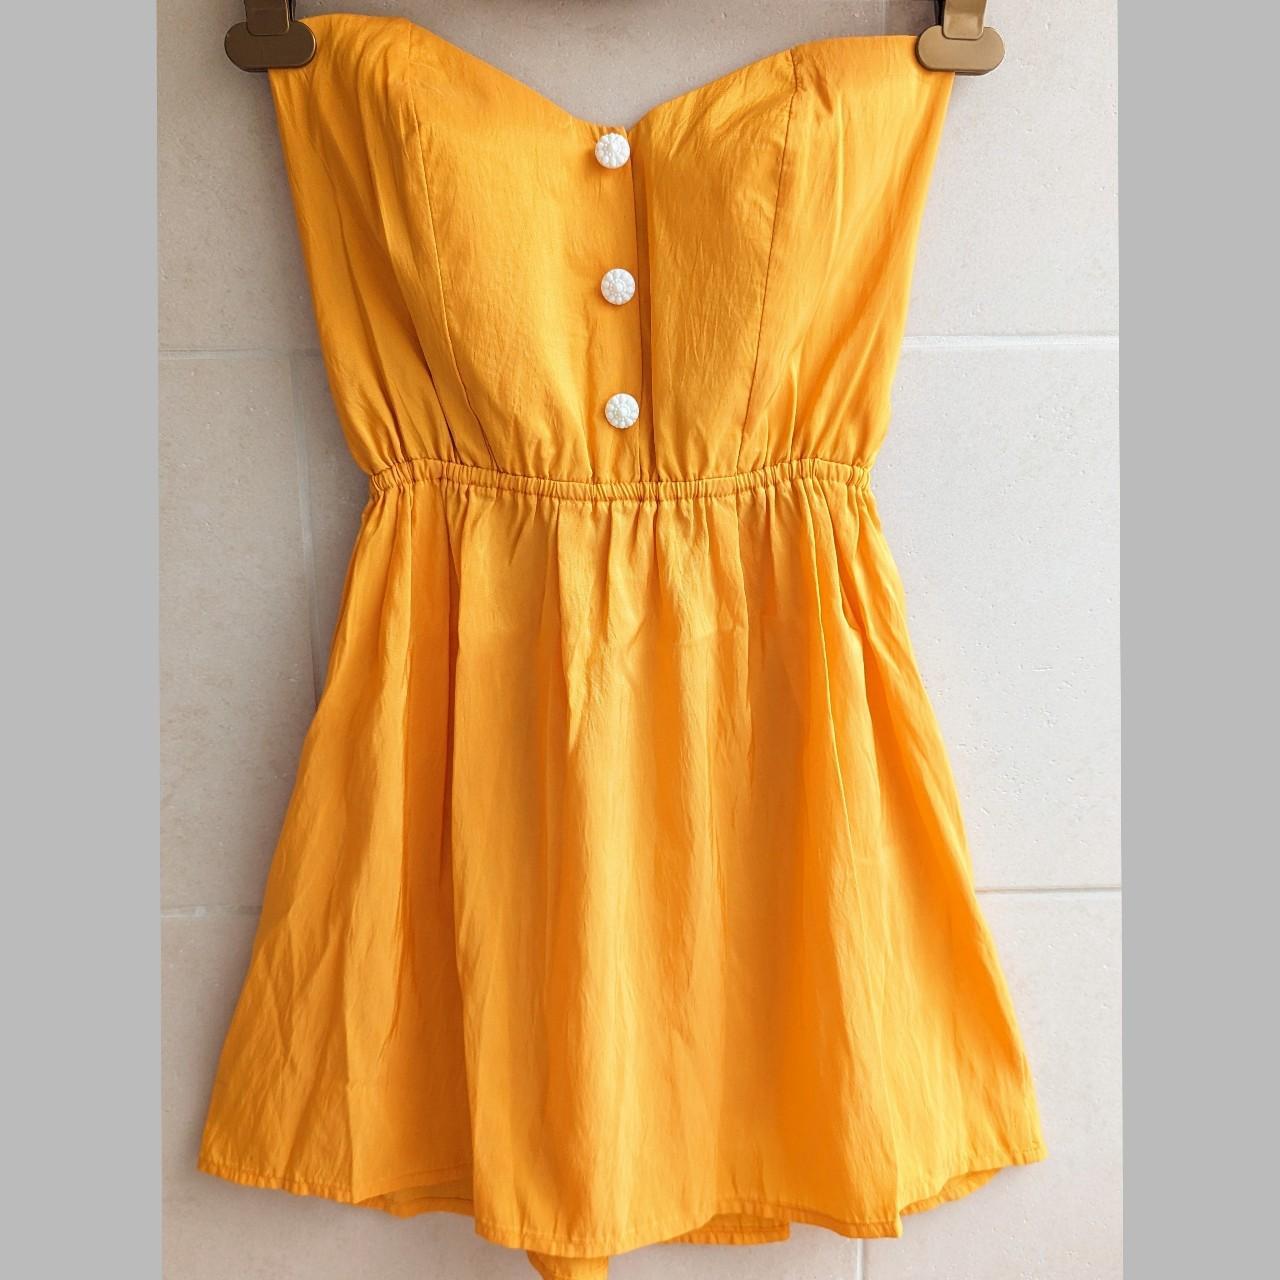 Van Heusen Woman Dresses, Van Heusen Yellow Dress for Women at  Vanheusenindia.com